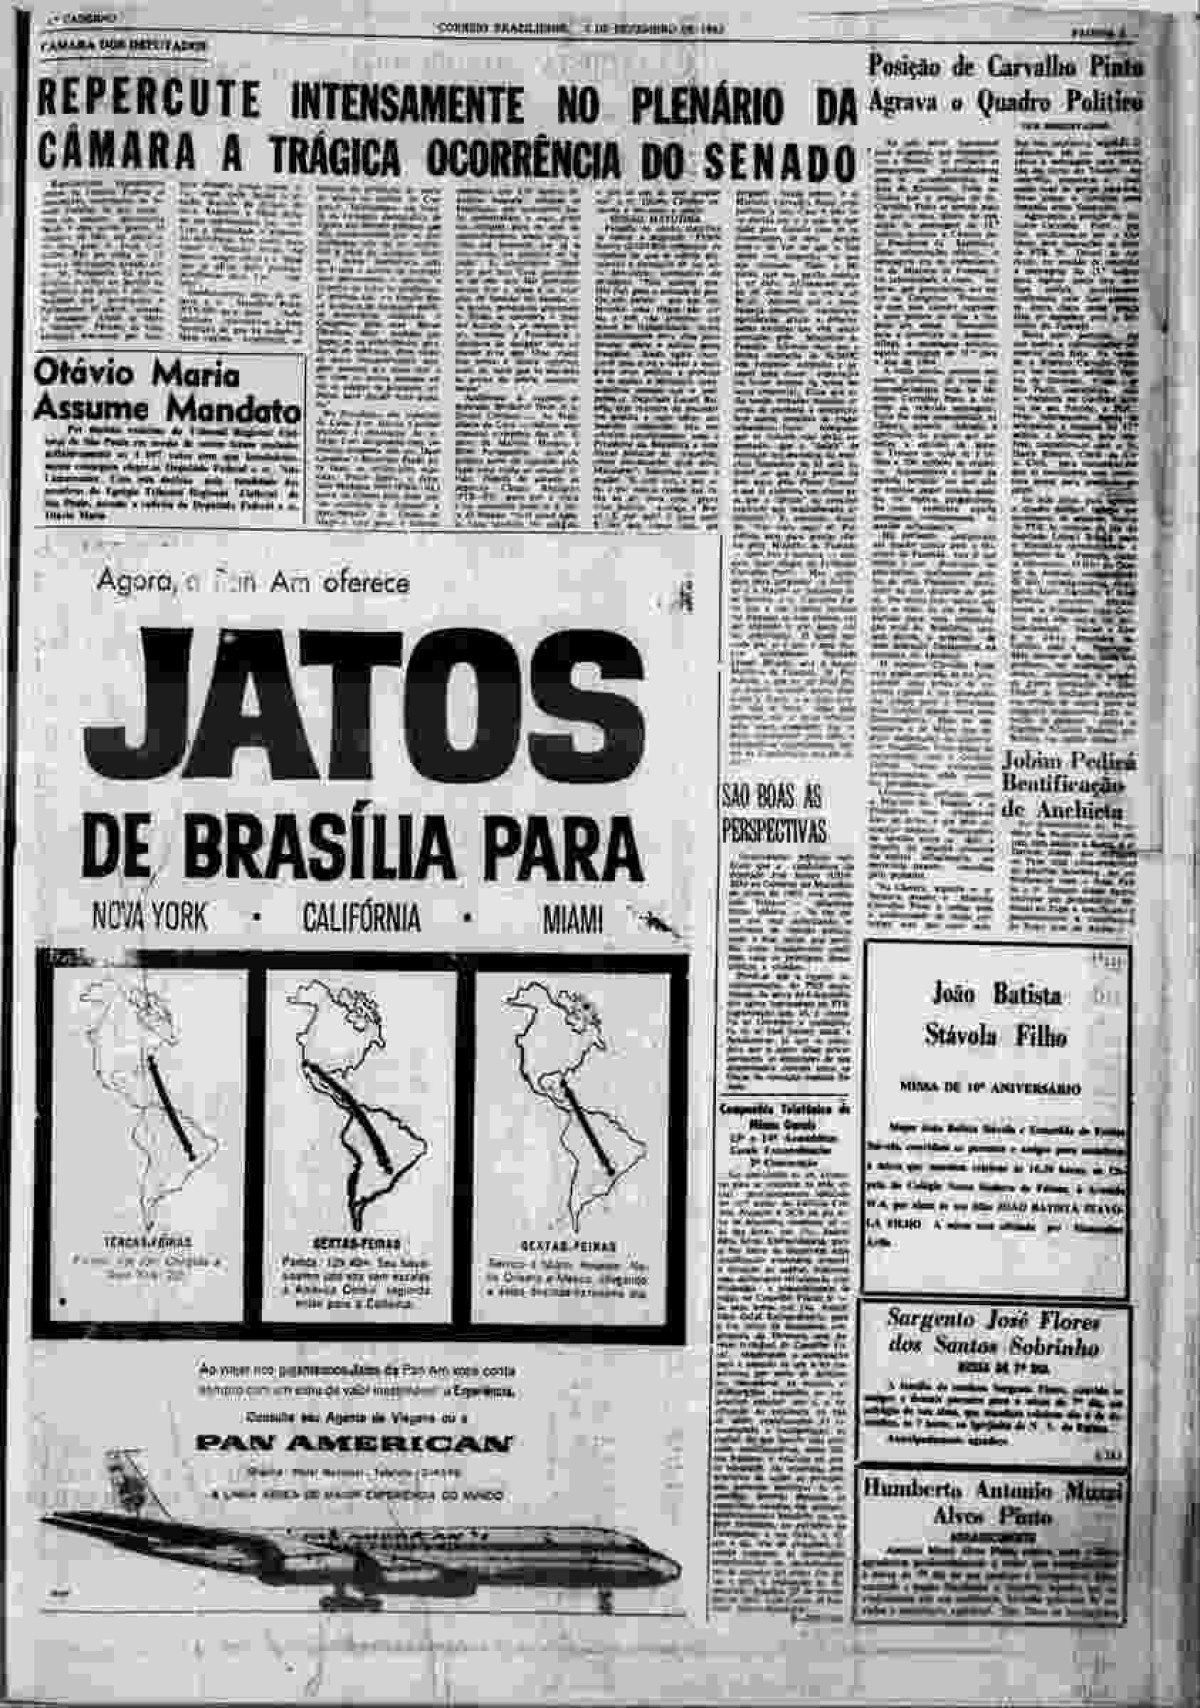 Cobertura do CB da morte do senador José Kairala, assassinado pelo senador Arnon de Mello no plenário do Senado 4/12/1963 